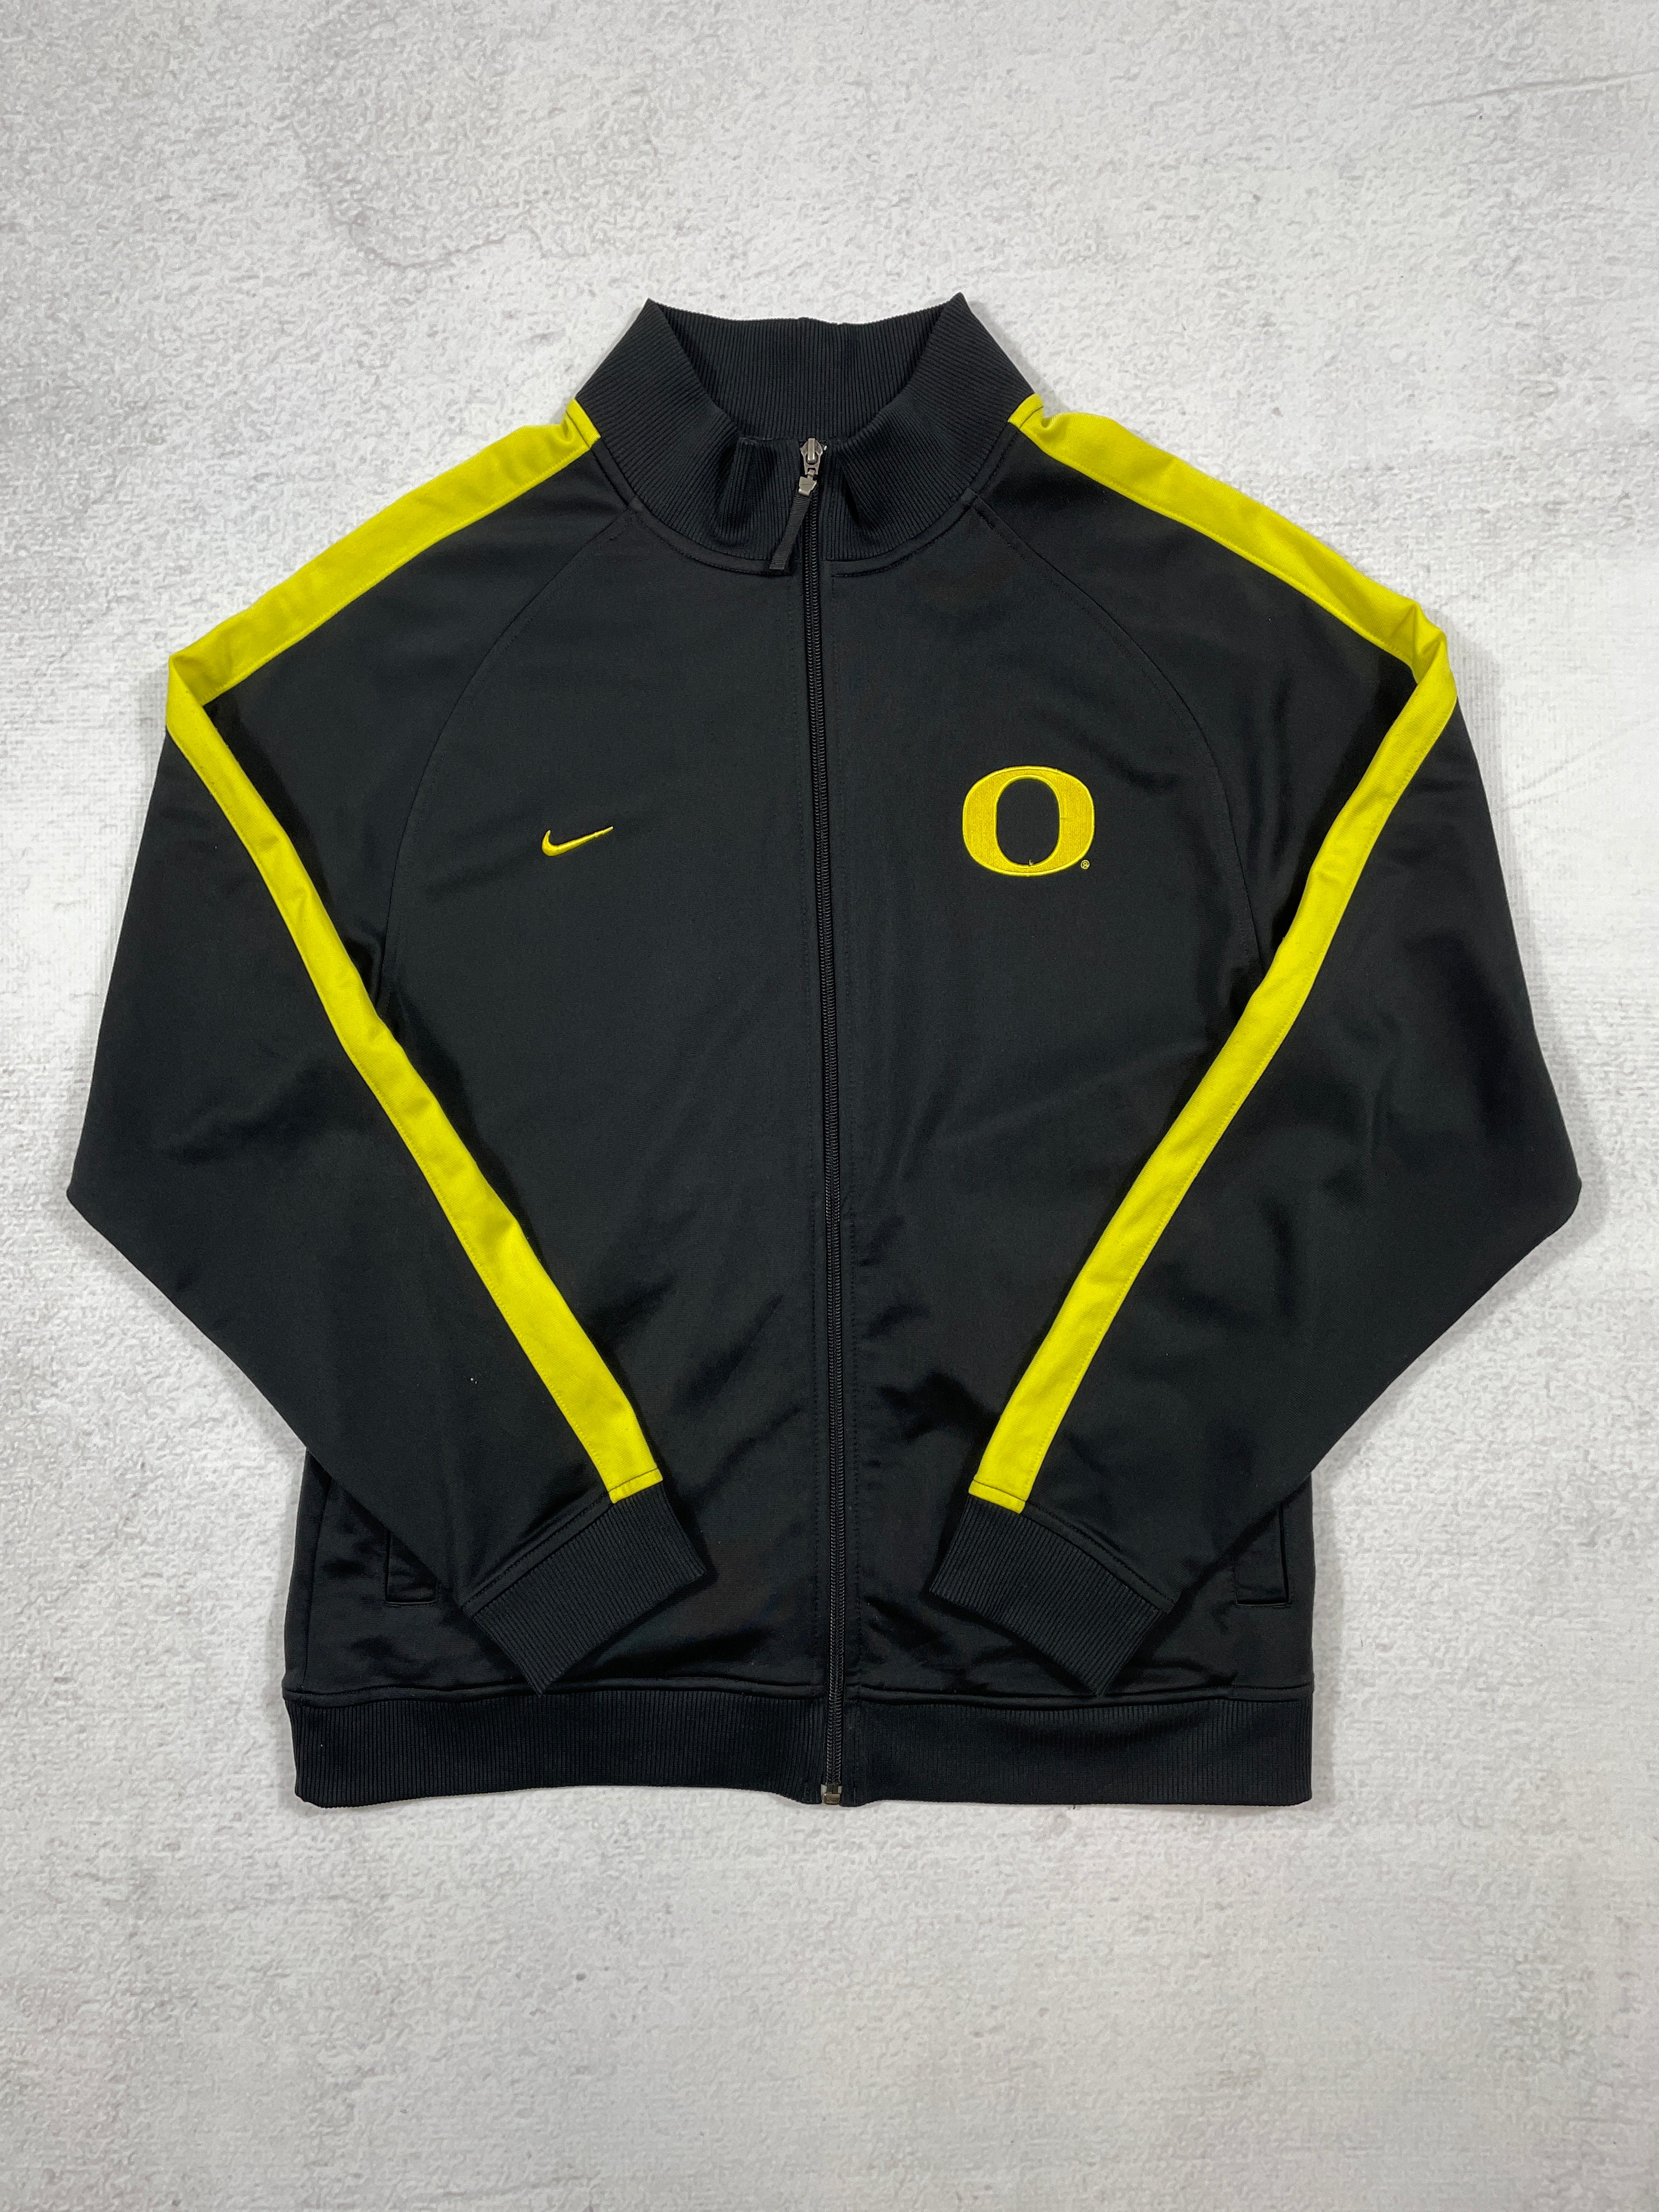 Vintage Nike Oregon Track Jacket - Men's Medium